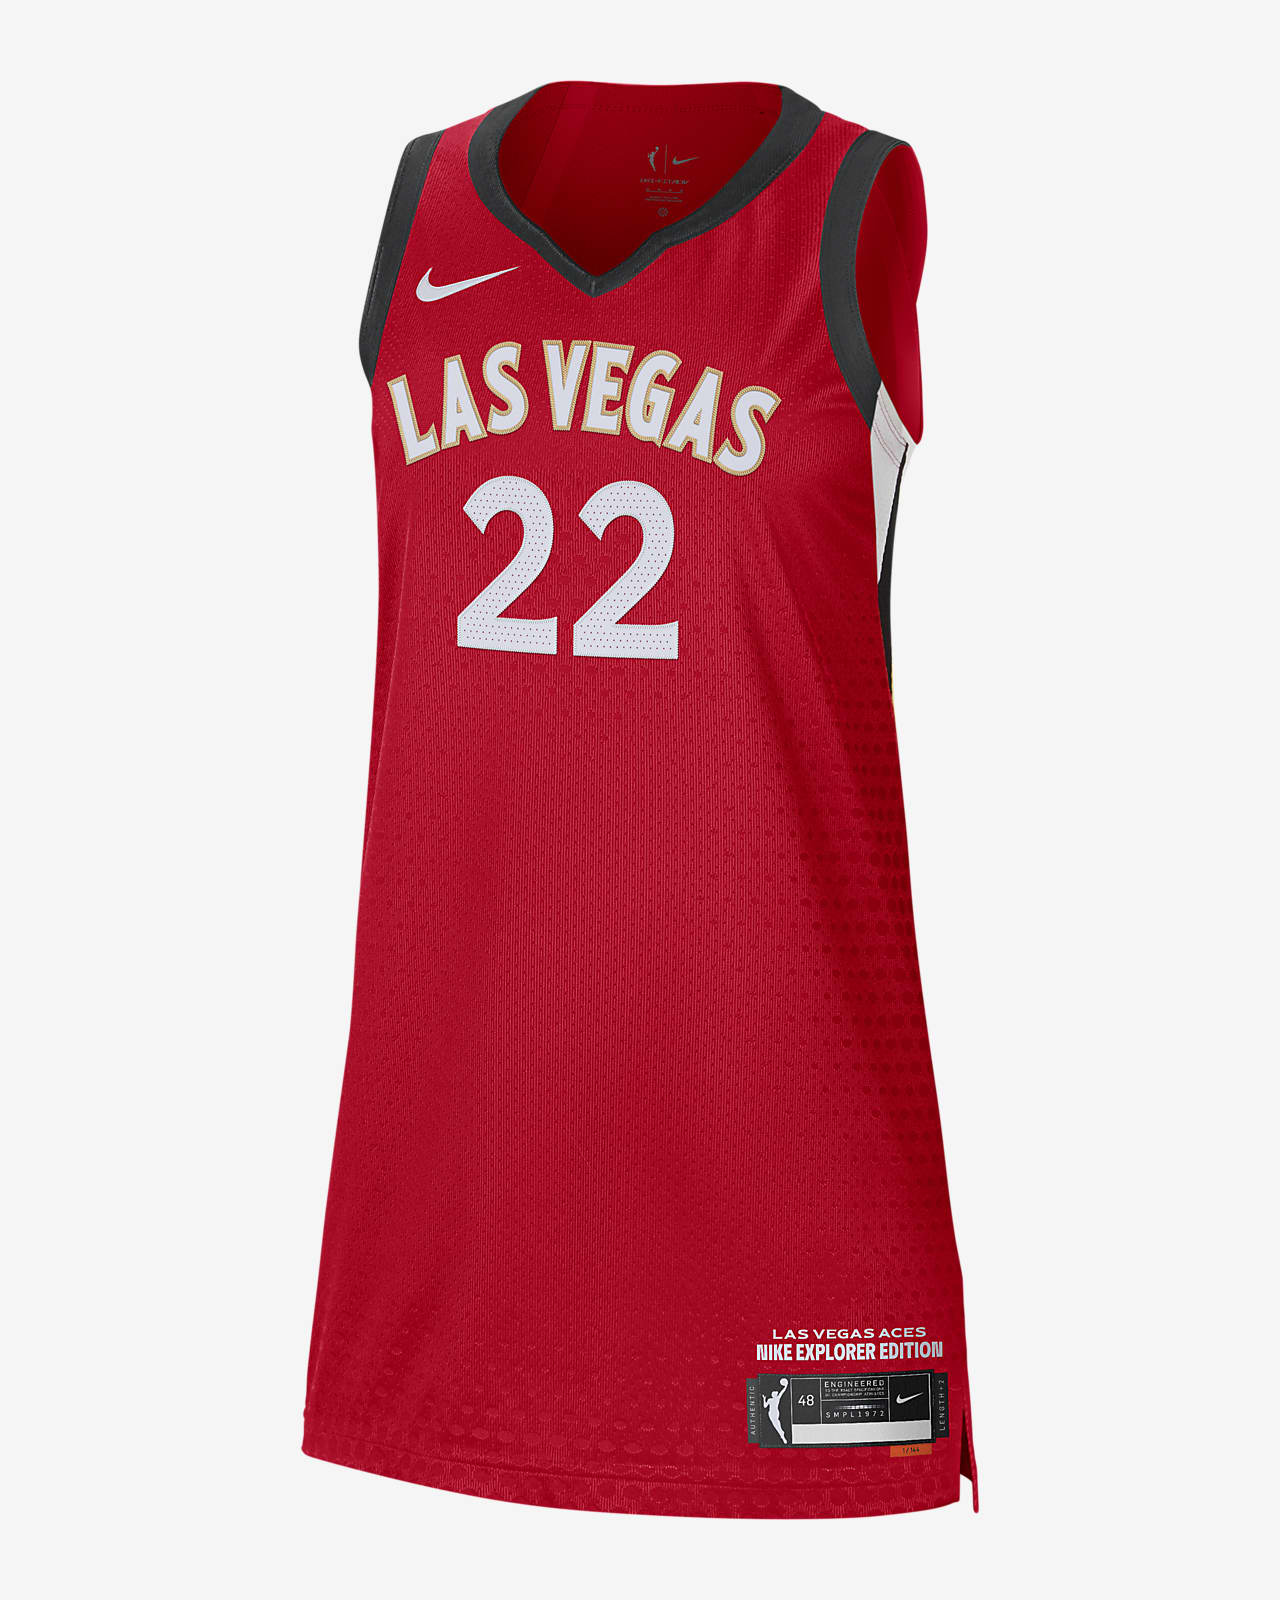 Nike WNBA “A’ja Wilson”Las Vegas Aces Rebel Edition Swingman Jersey